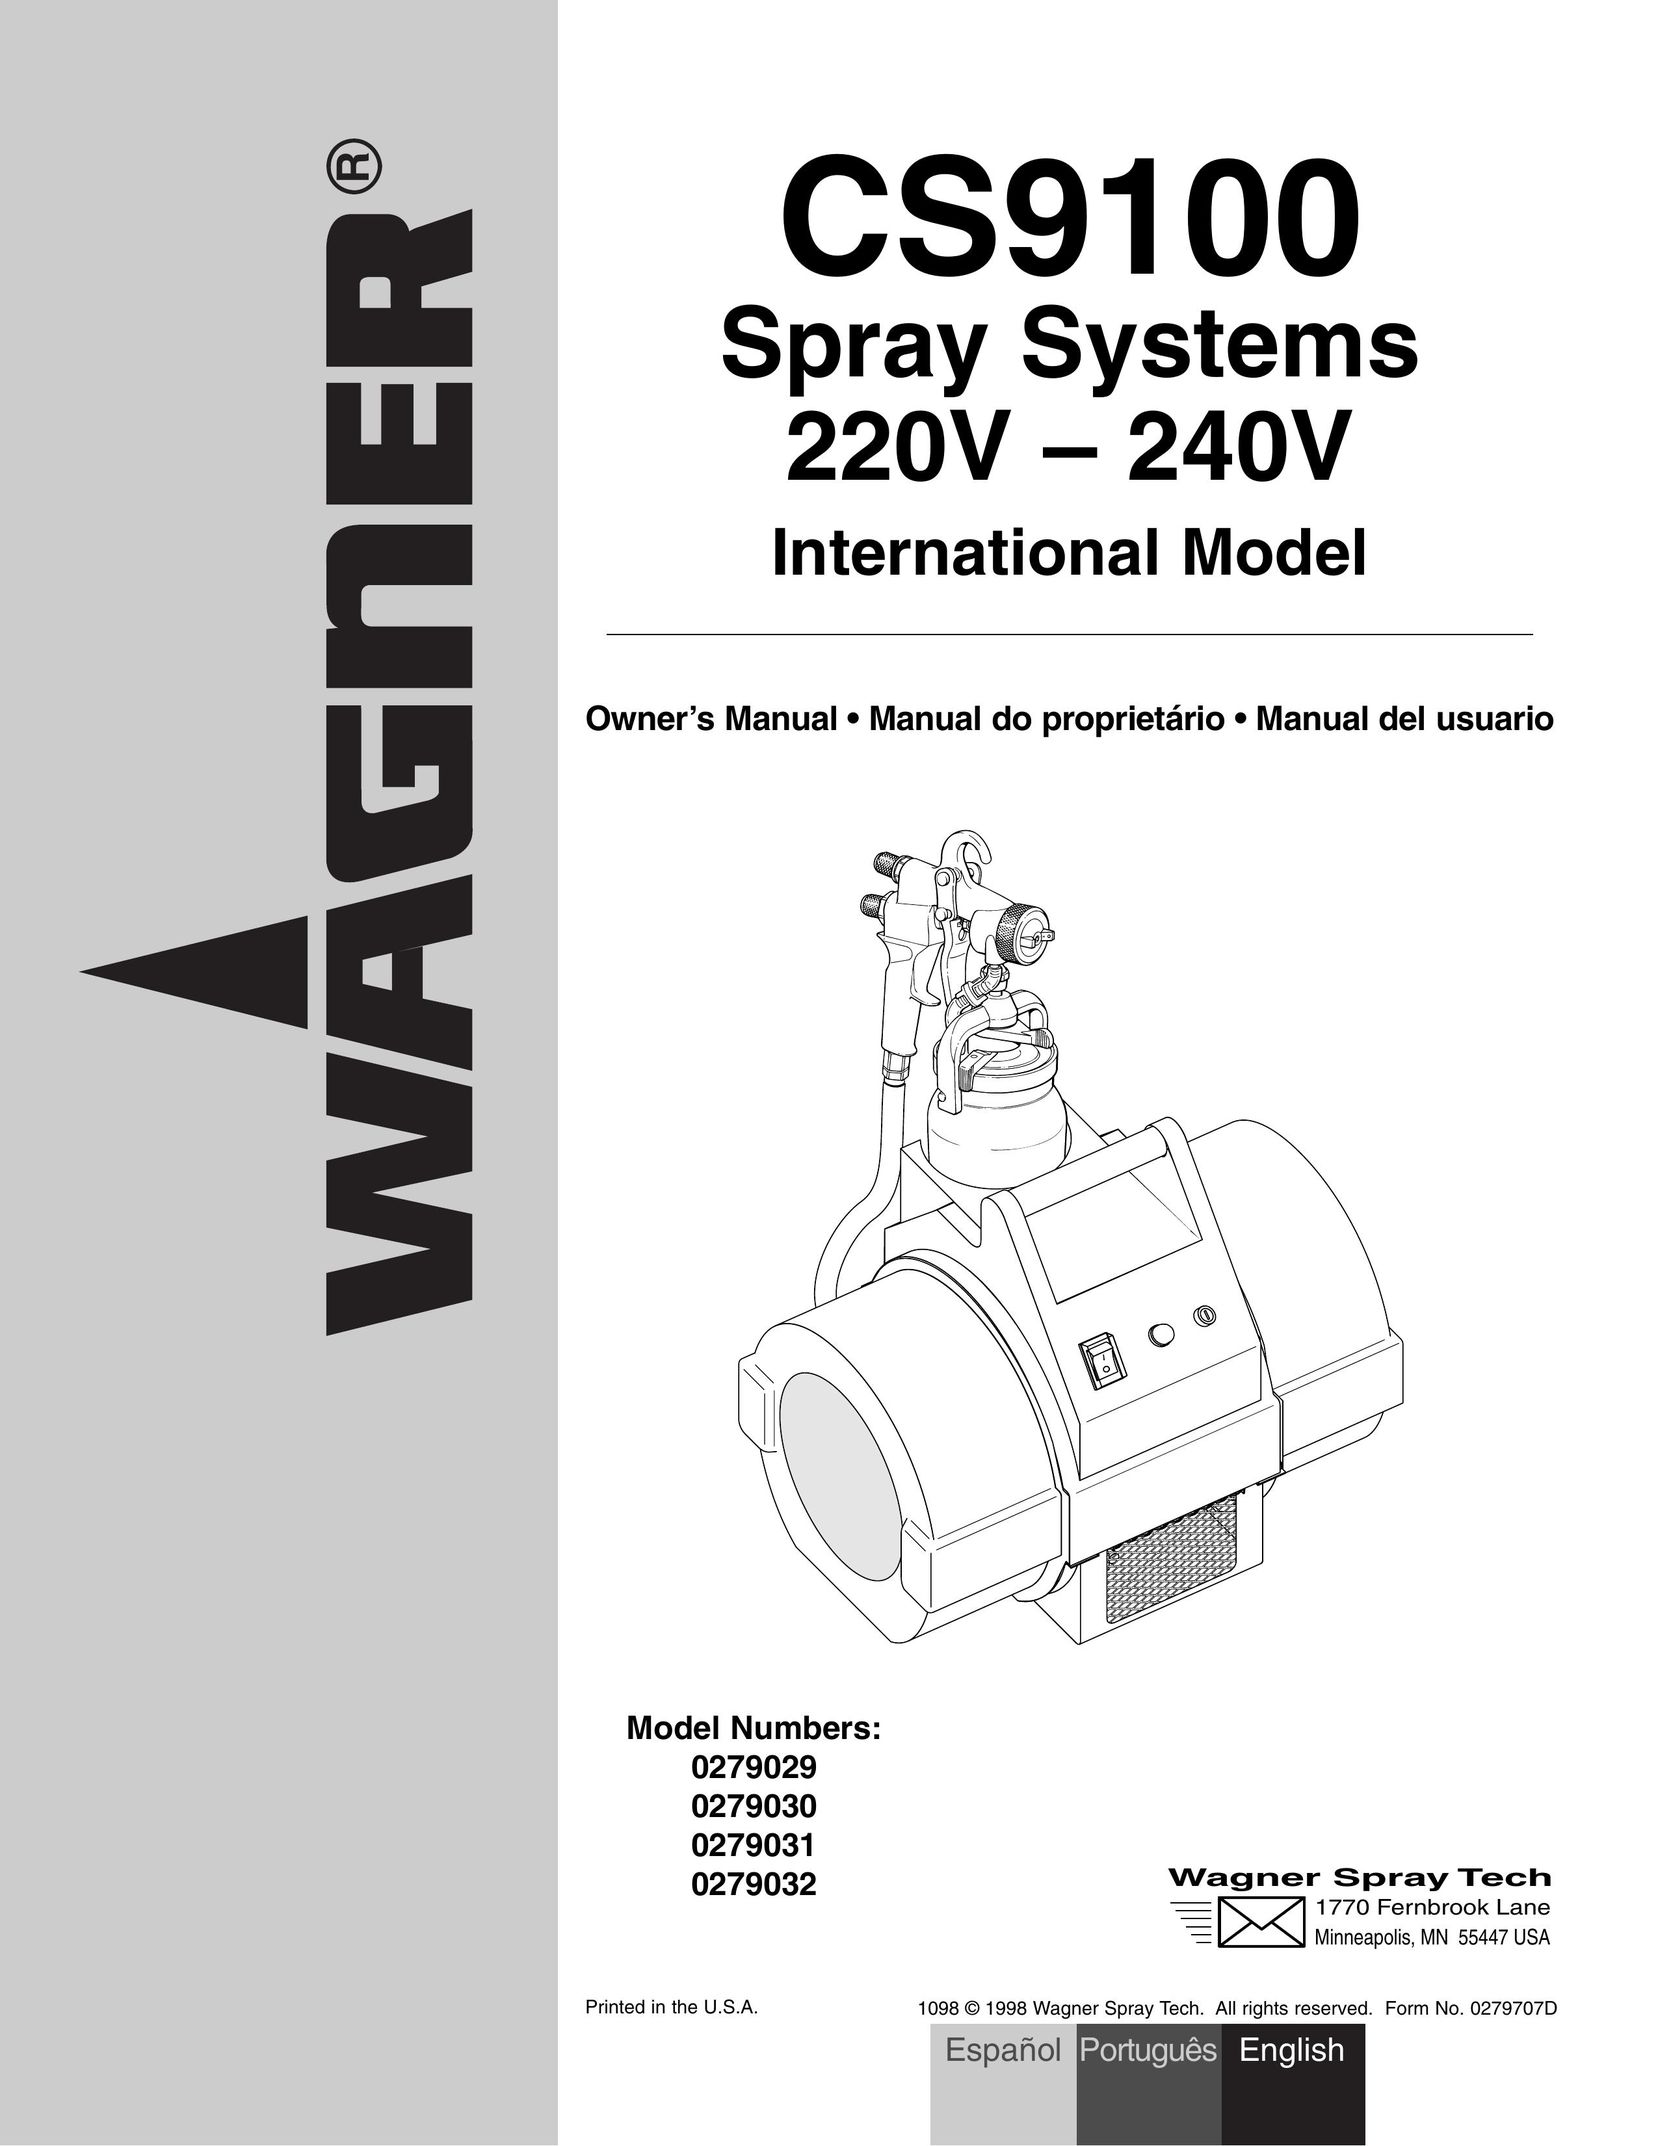 Wagner SprayTech 279031 Paint Sprayer User Manual